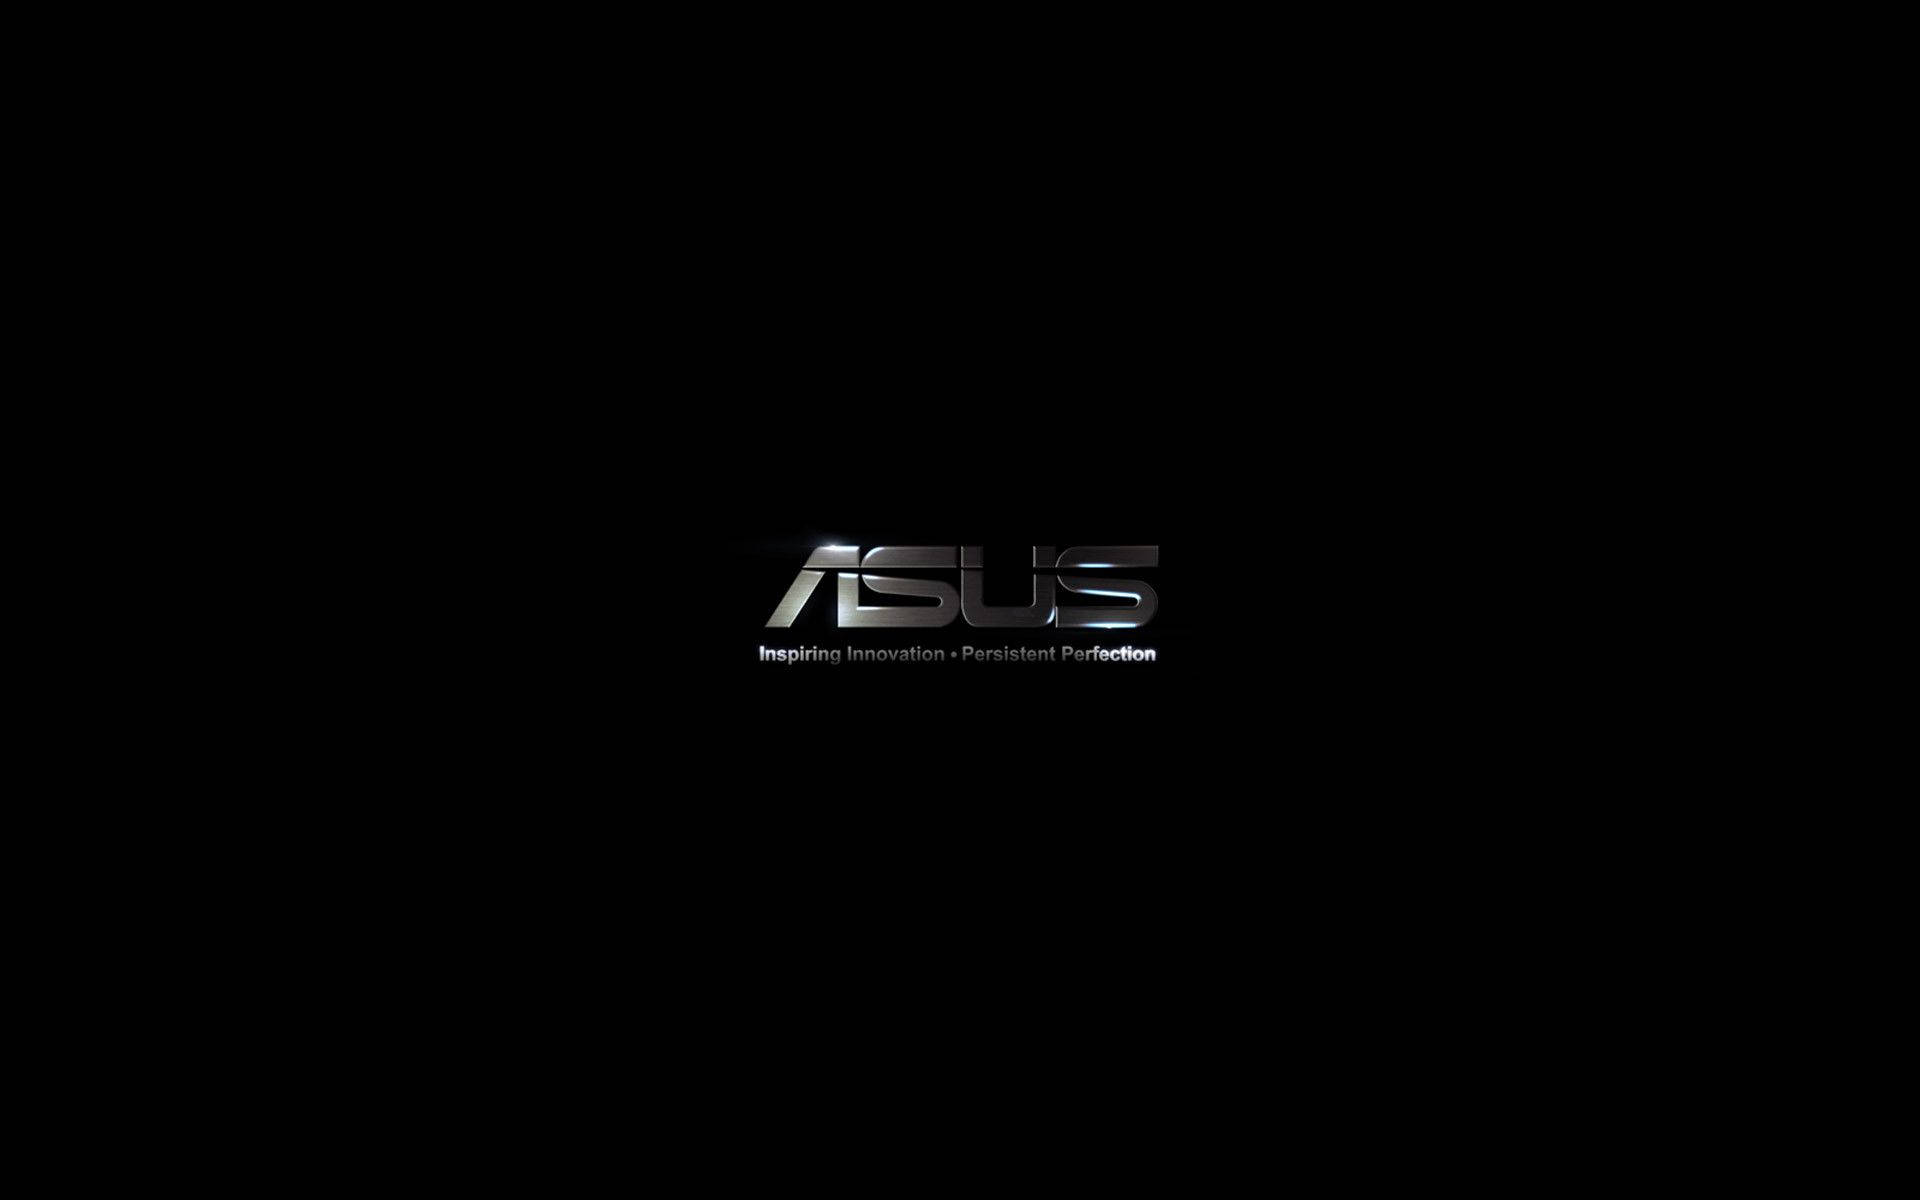 Asus Silver Logo Slogan Background